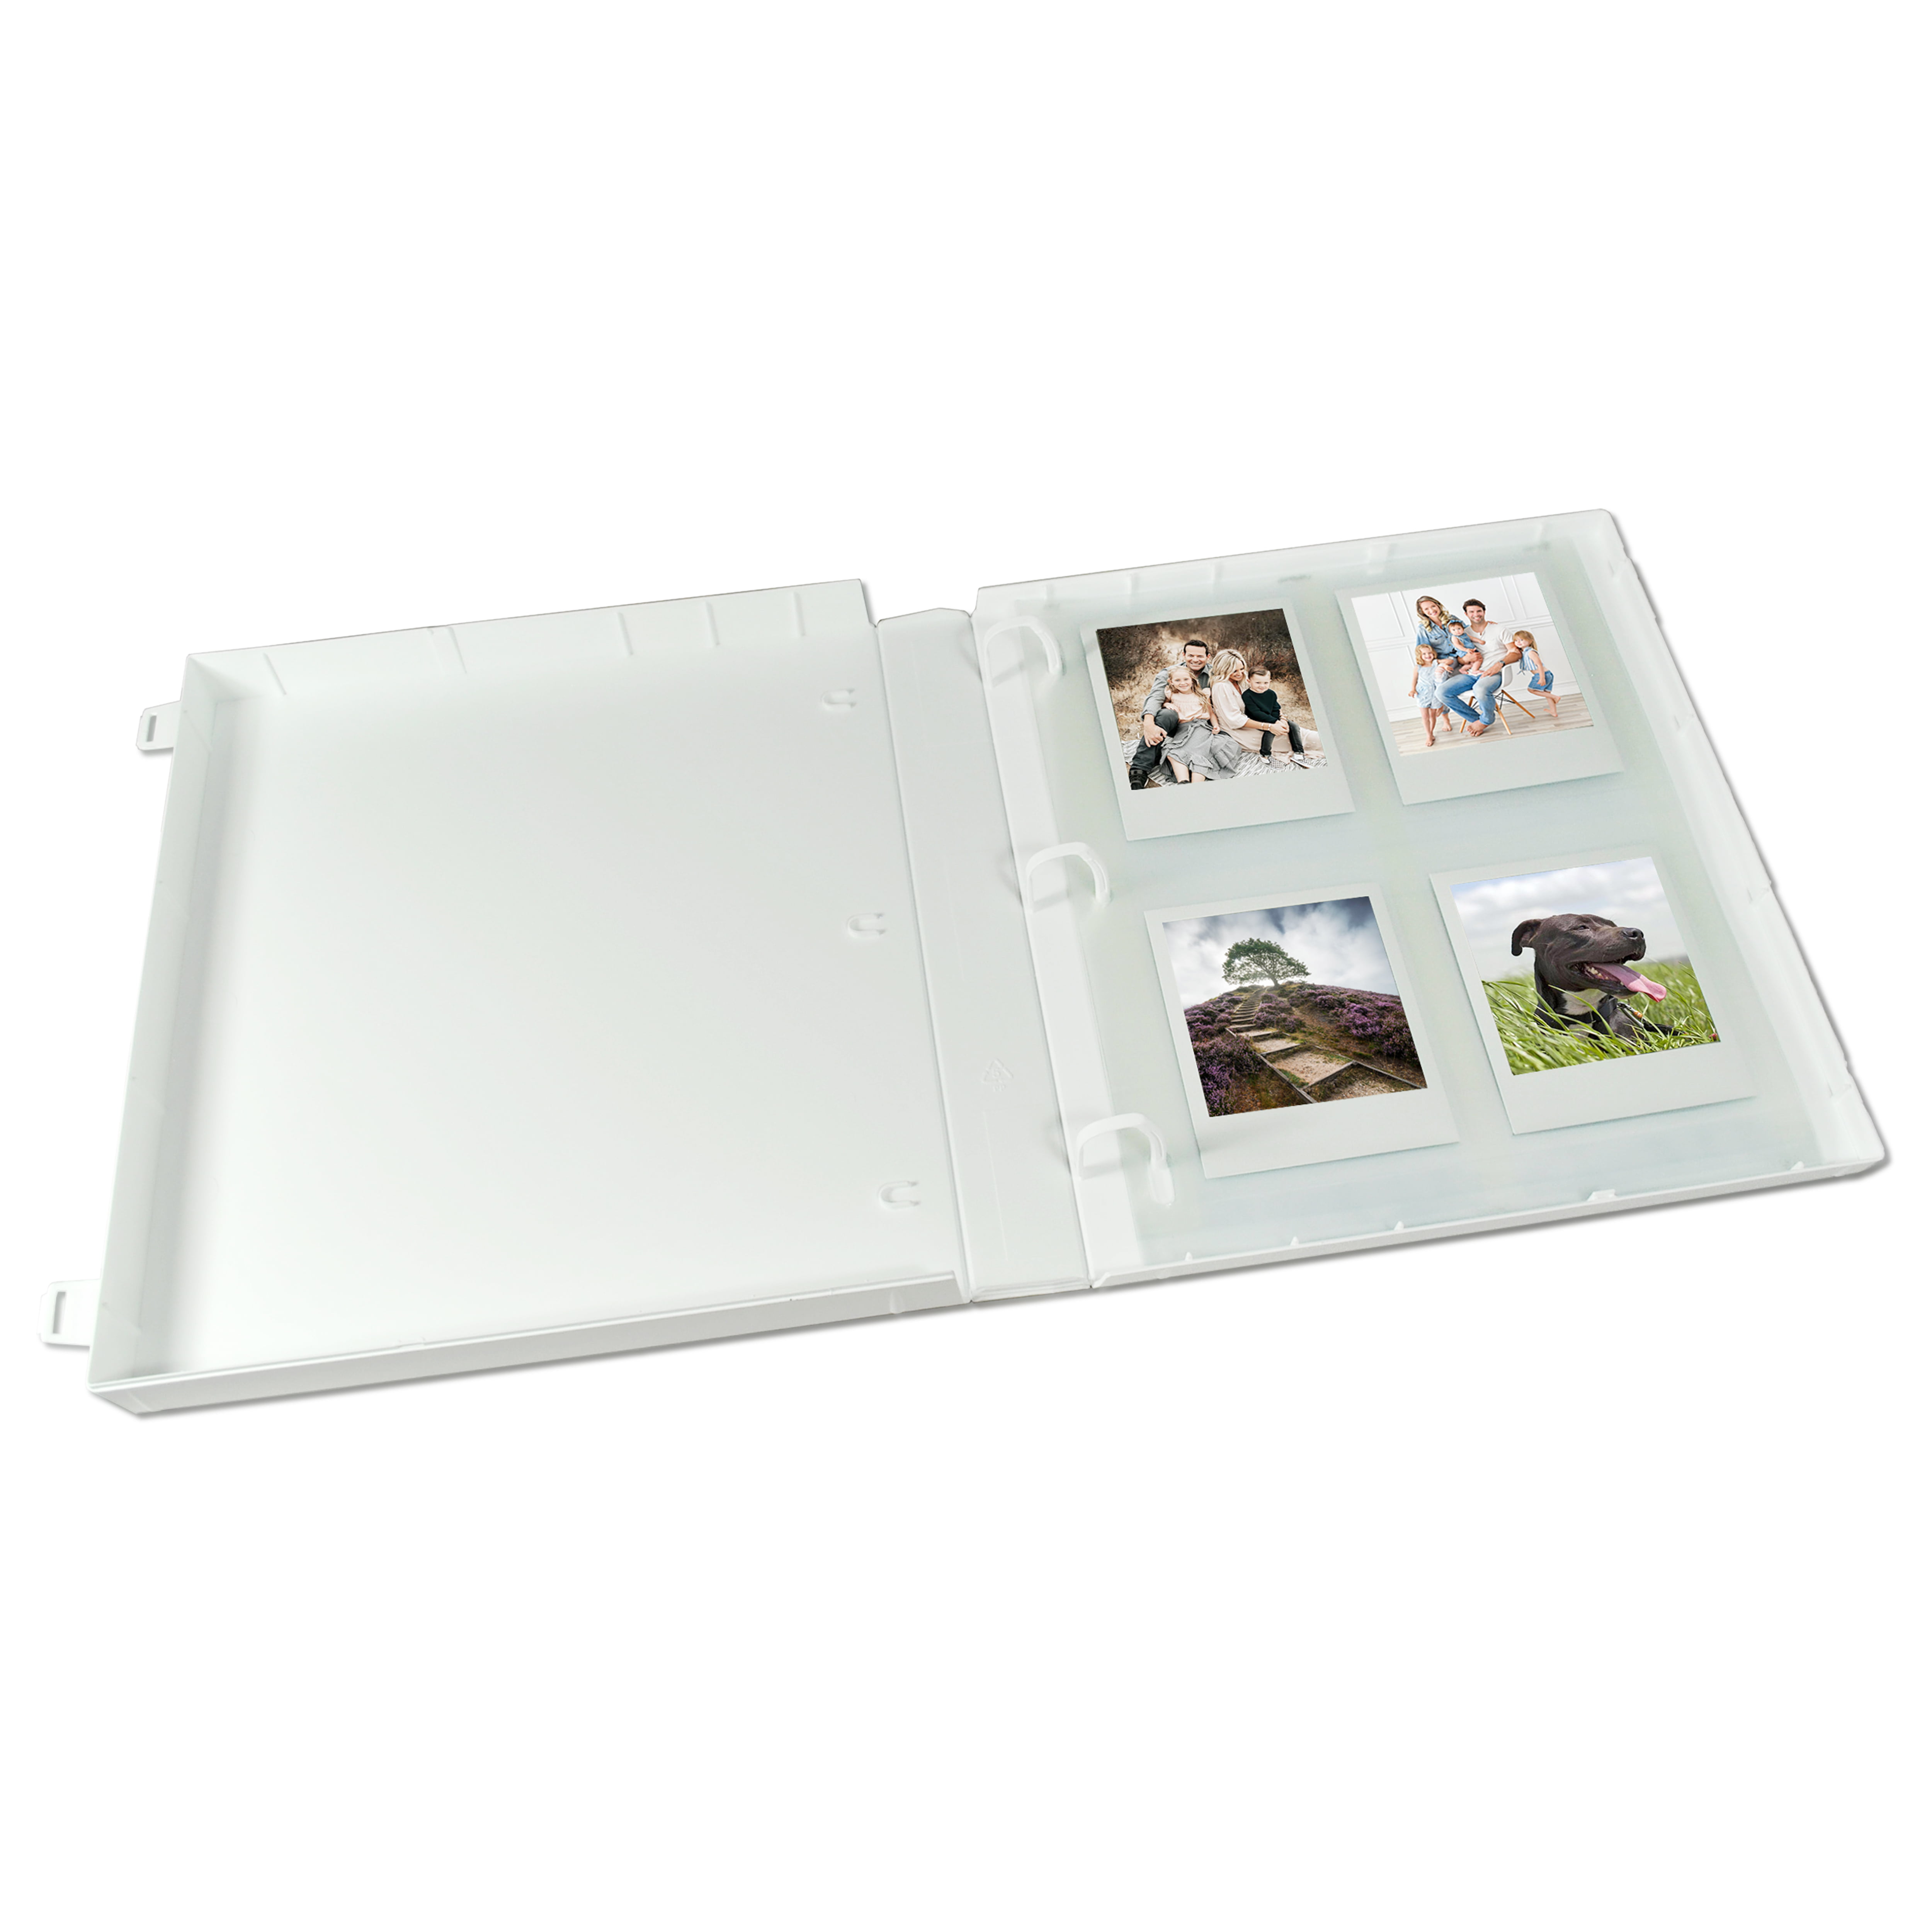 Wholesale polaroid photo album Available For Your Trip Down Memory Lane 